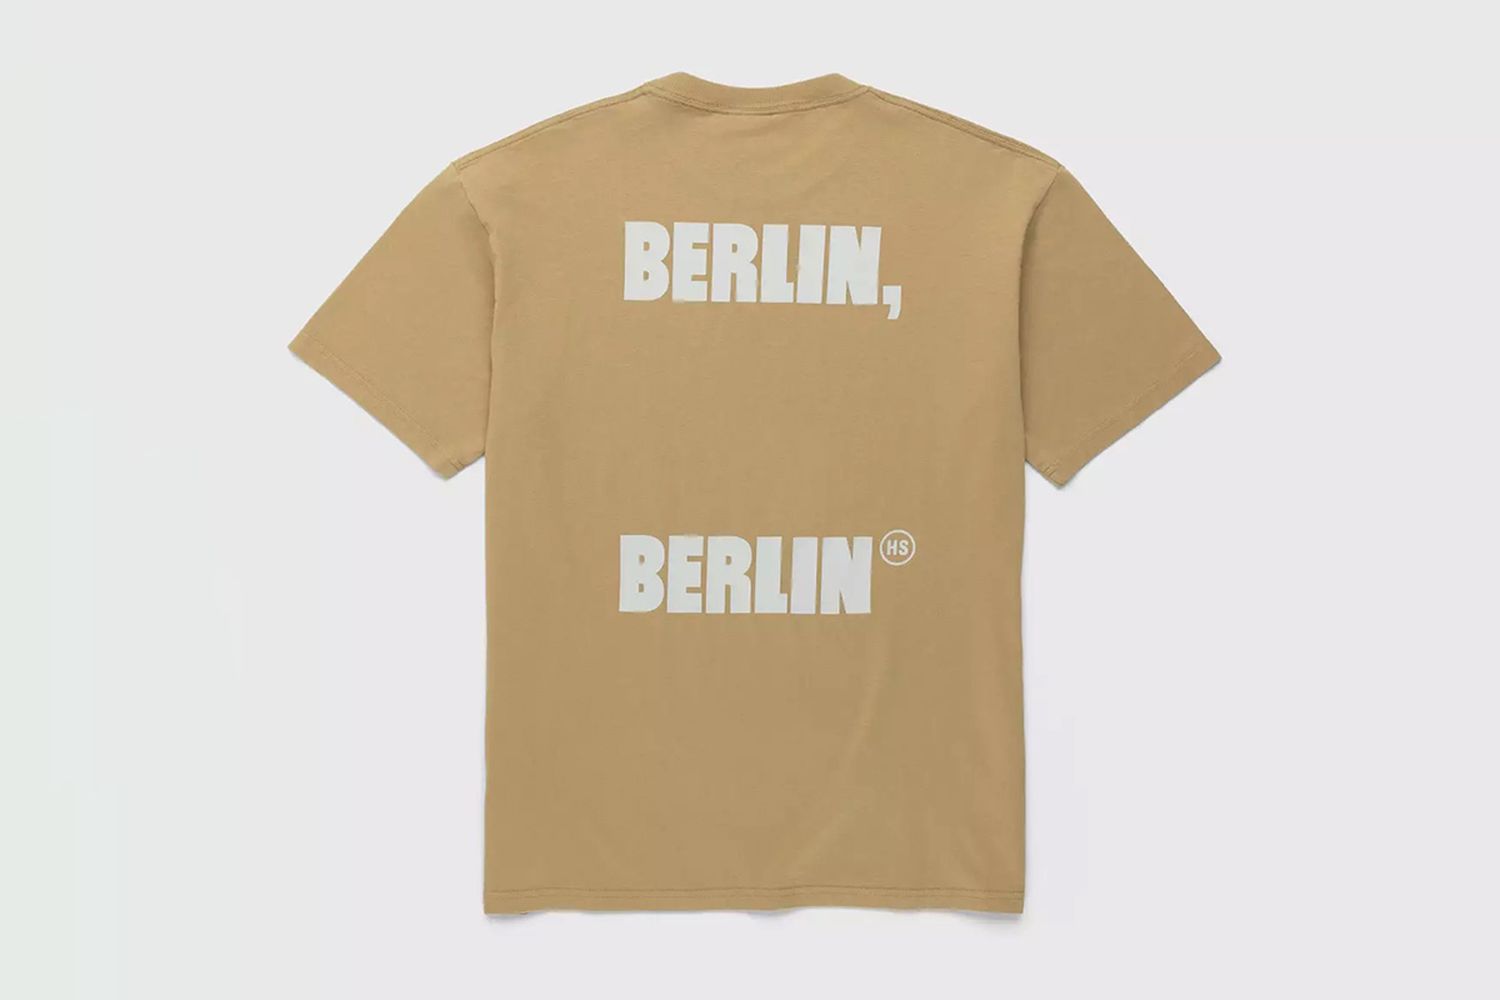 BERLIN, BERLIN 3 T-Shirt